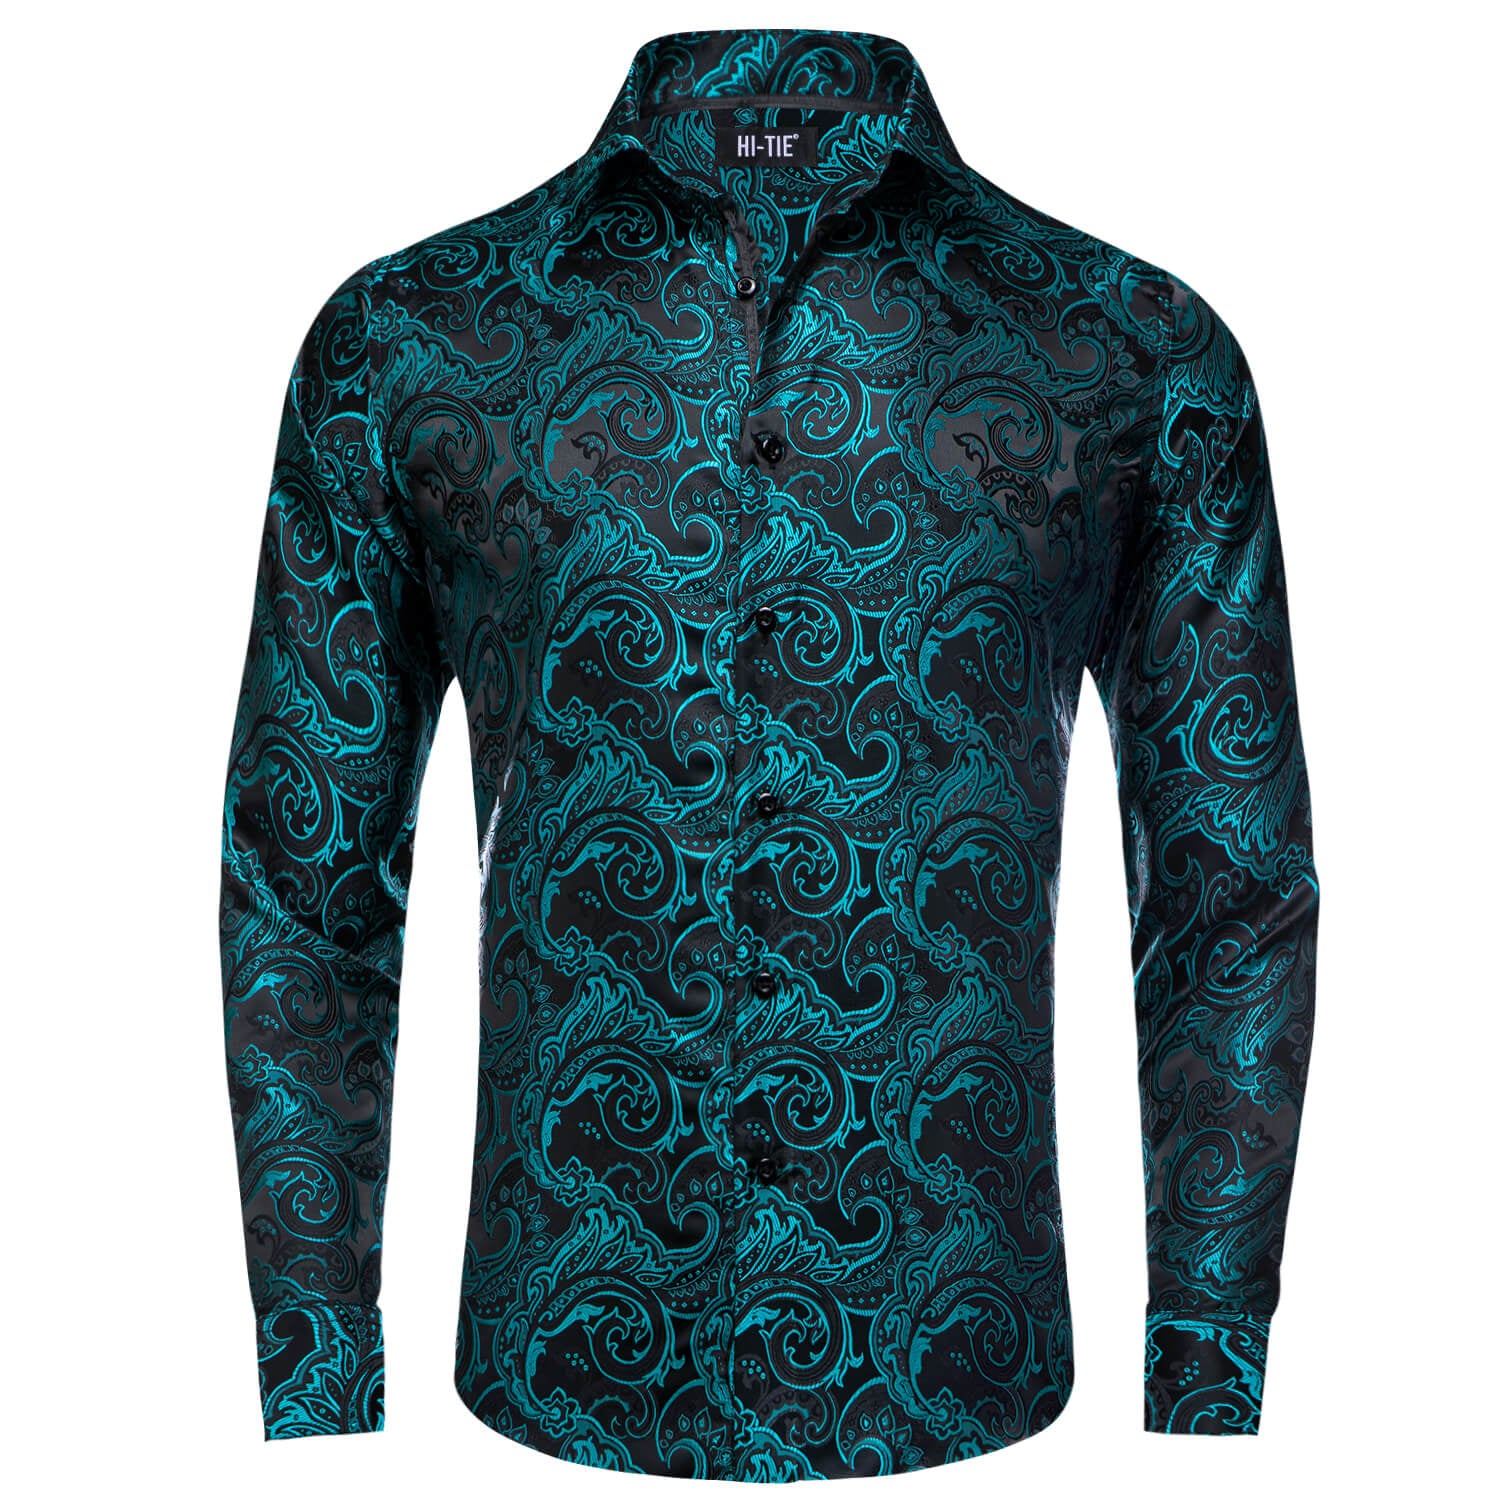 Black Teal Paisley Jacquard Woven Silk Shirt